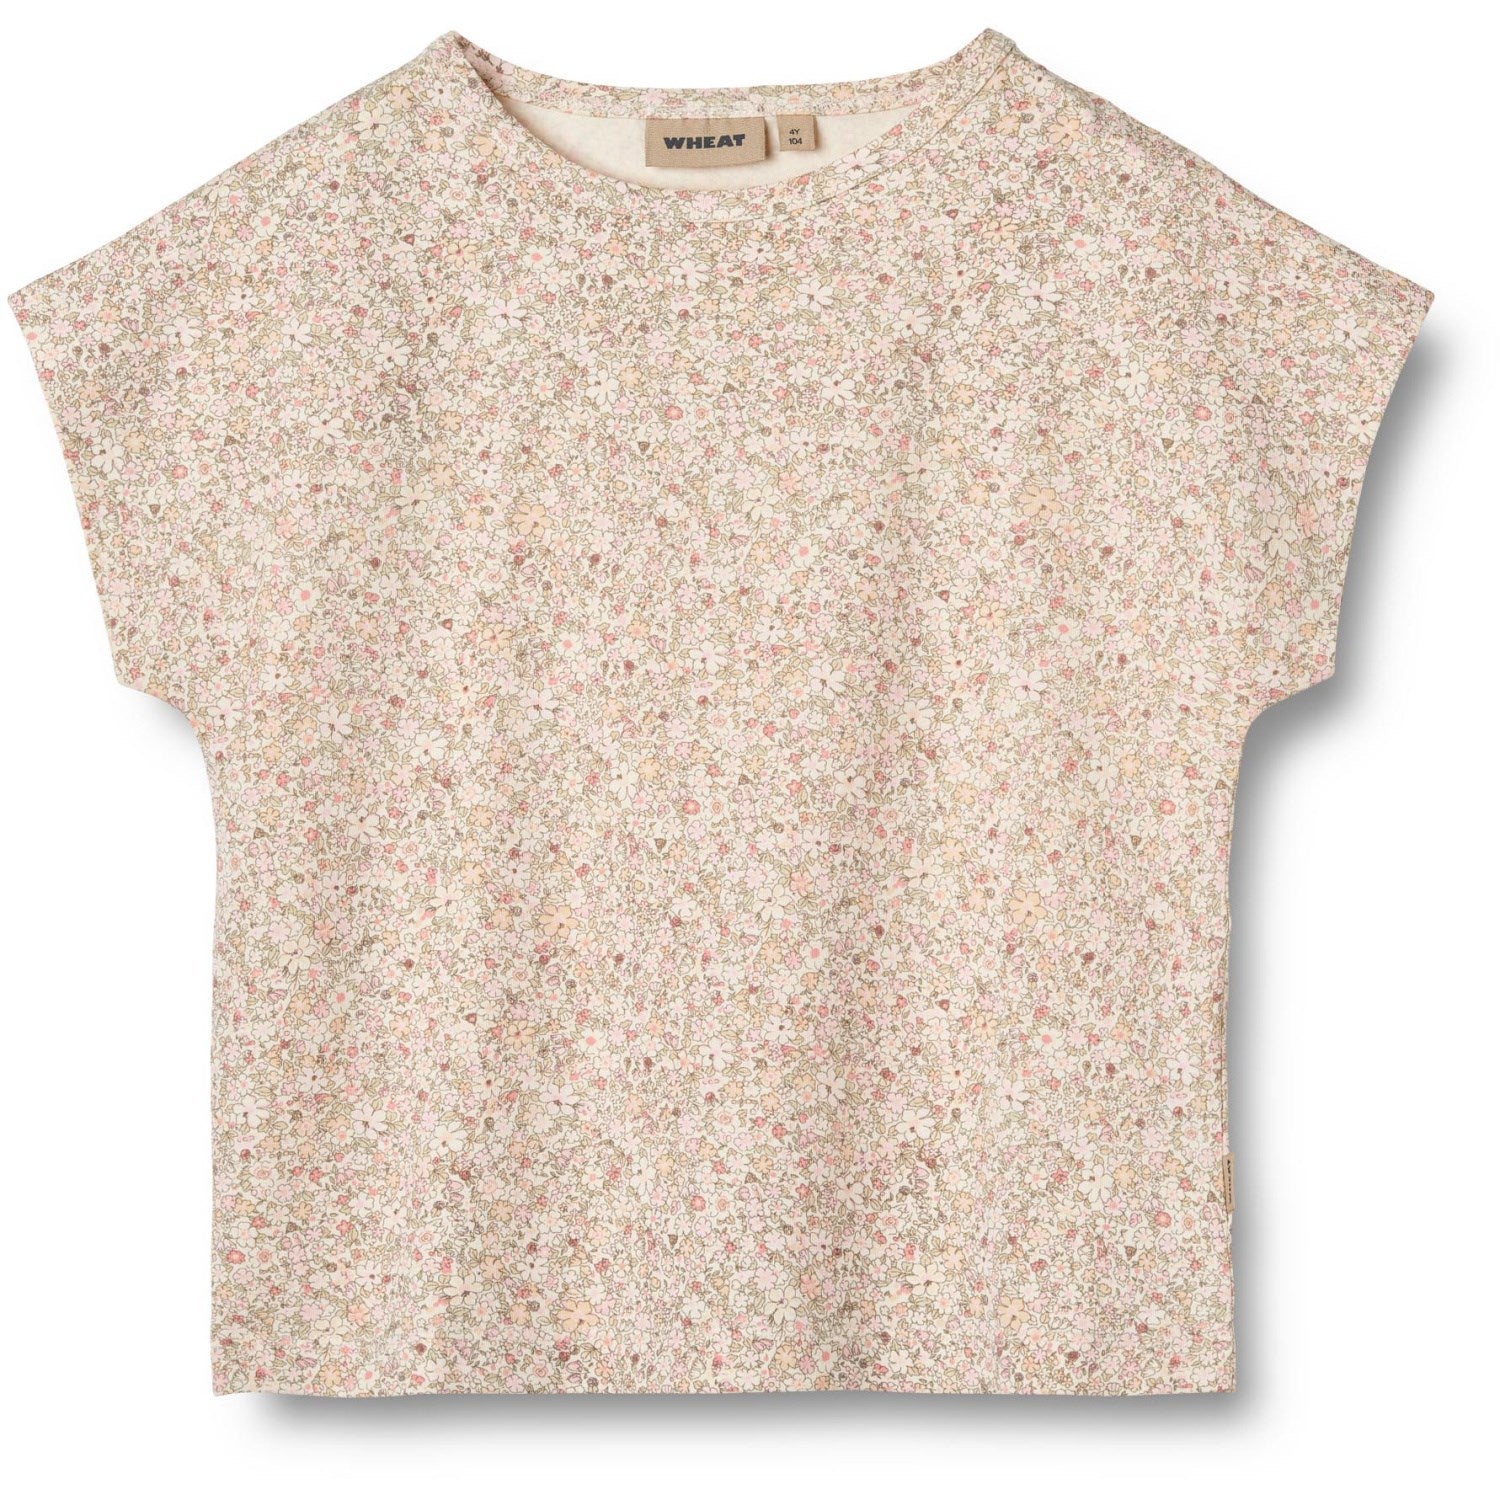 Wheat Cream Flower Meadow T-shirt Bette